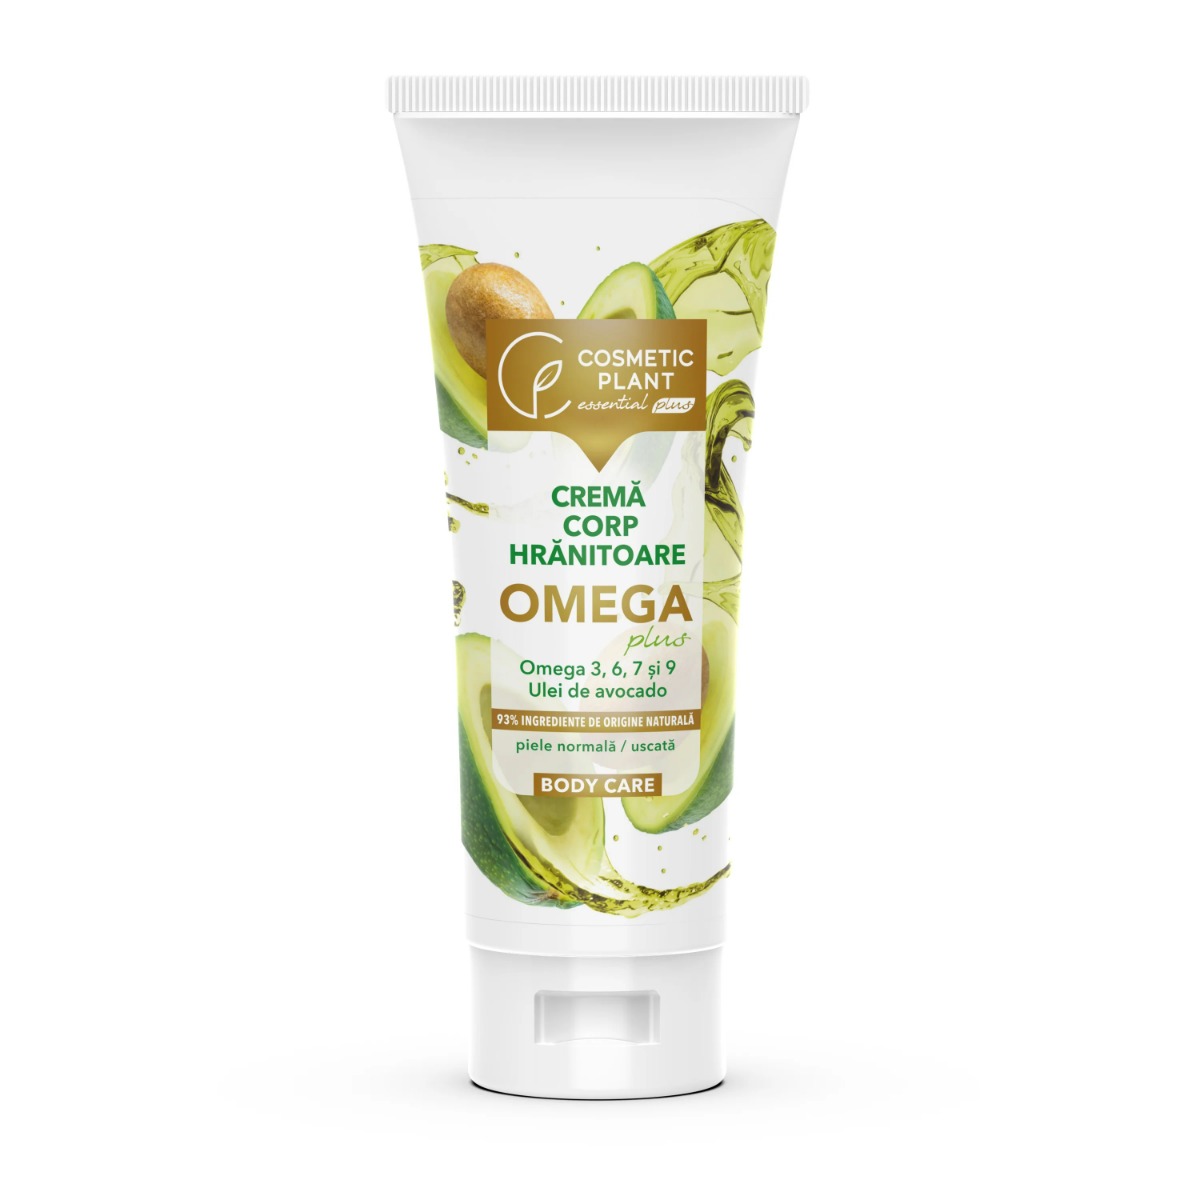 Crema de corp hranitoare cu omega 3 6 7 8 si ulei de avocado Omega Plus, 200ml, Cosmetic Plant